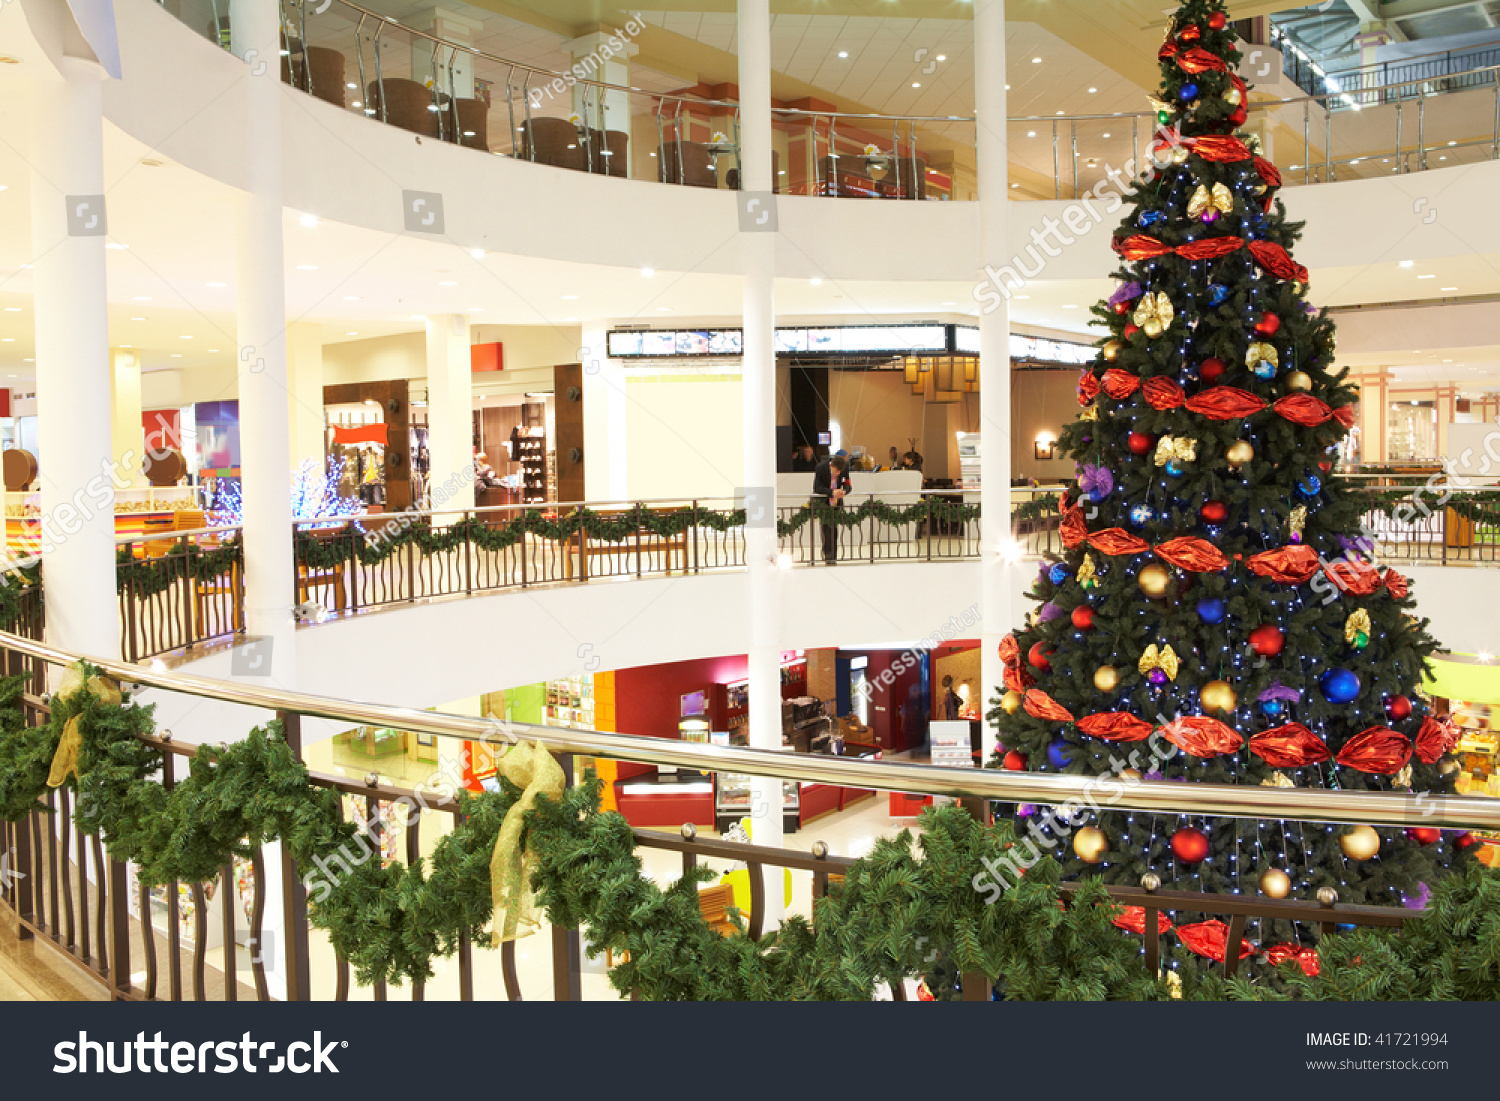 Image Big Decorated Christmas Tree Mall Stock Photo 41721994 - Shutterstock